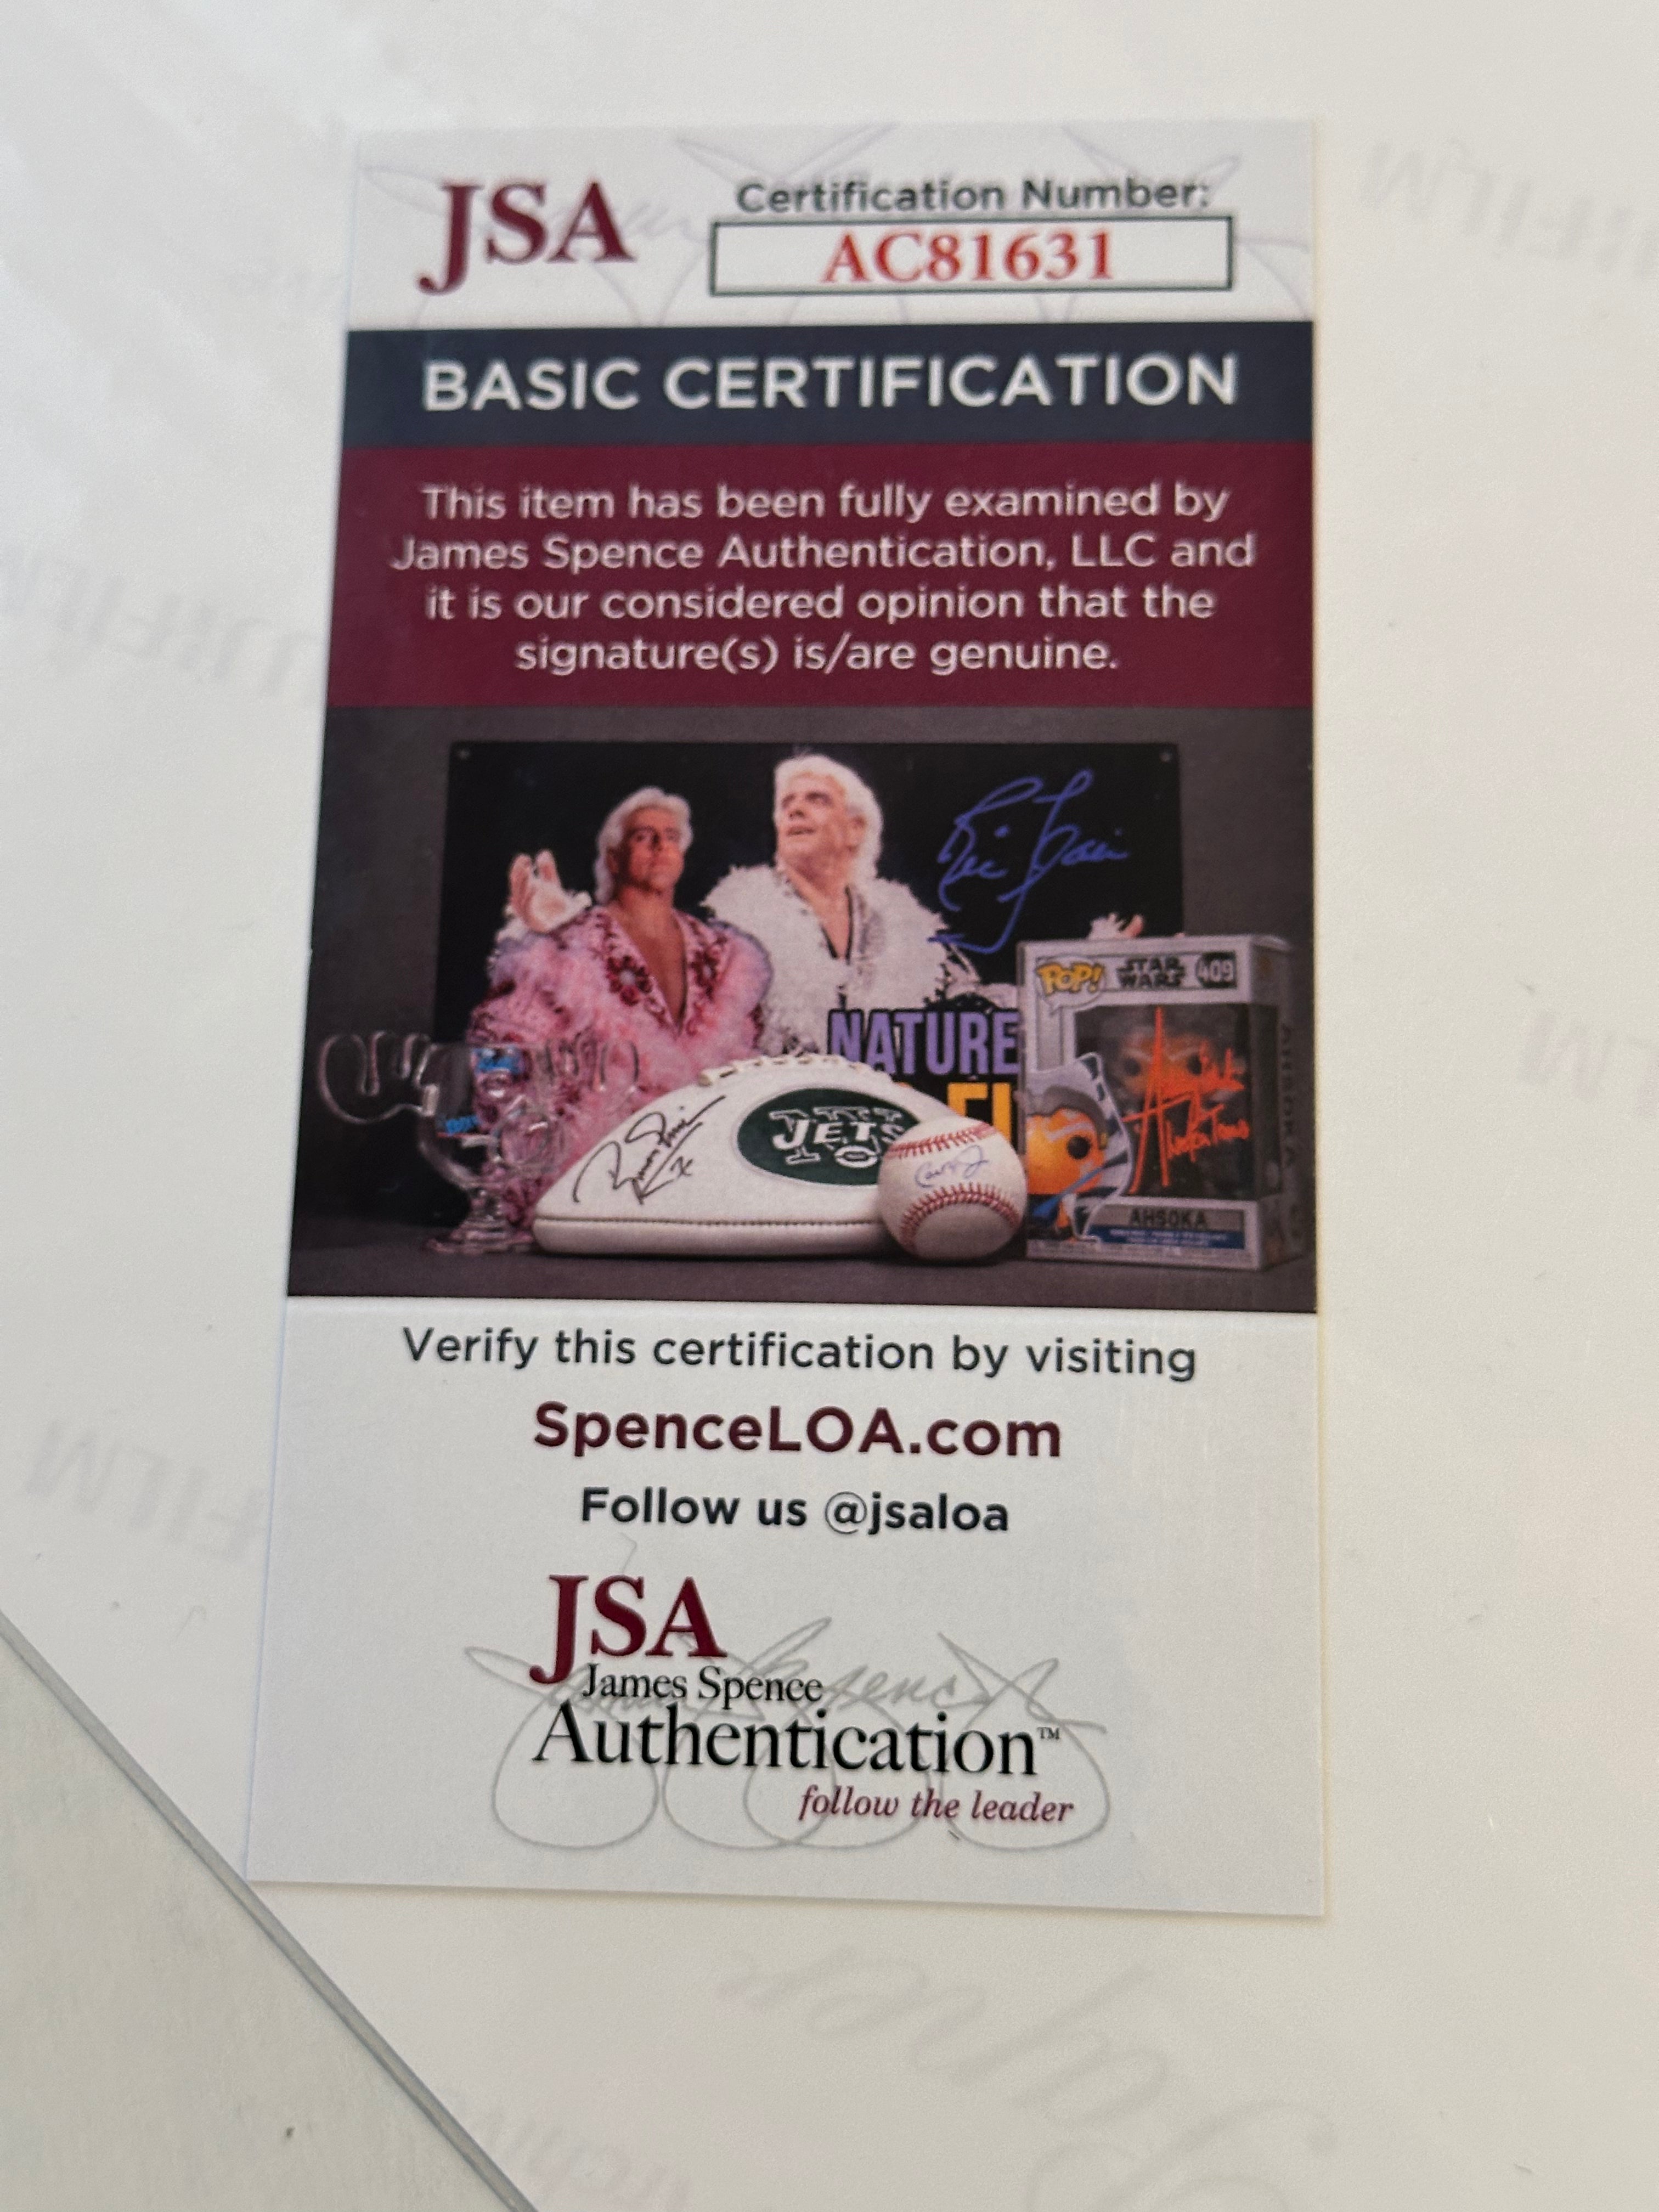 Dennis Rodman rare autograph 8x10 signed photo certified by JSA